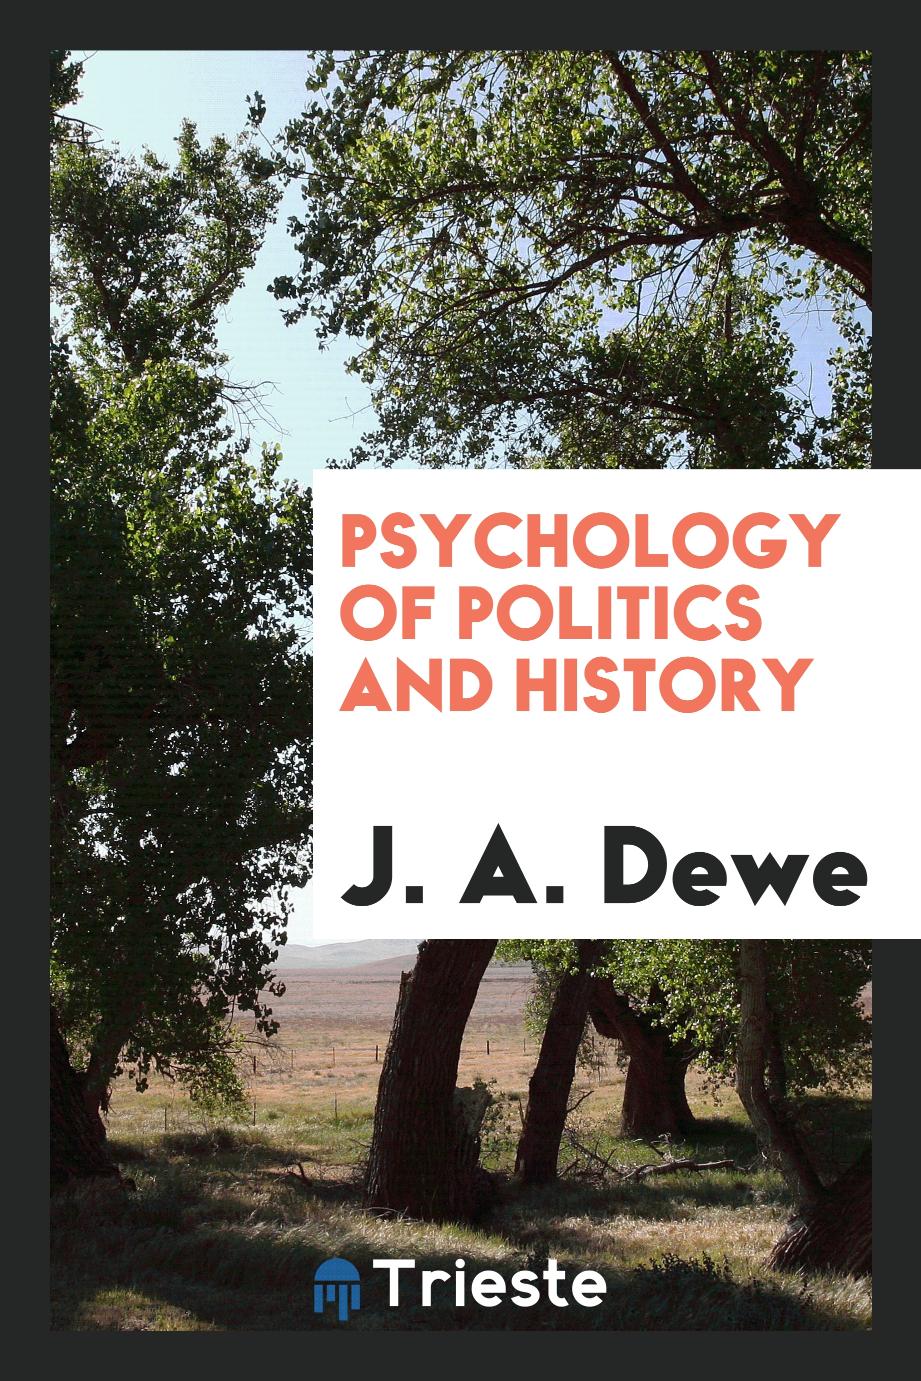 Psychology of politics and history